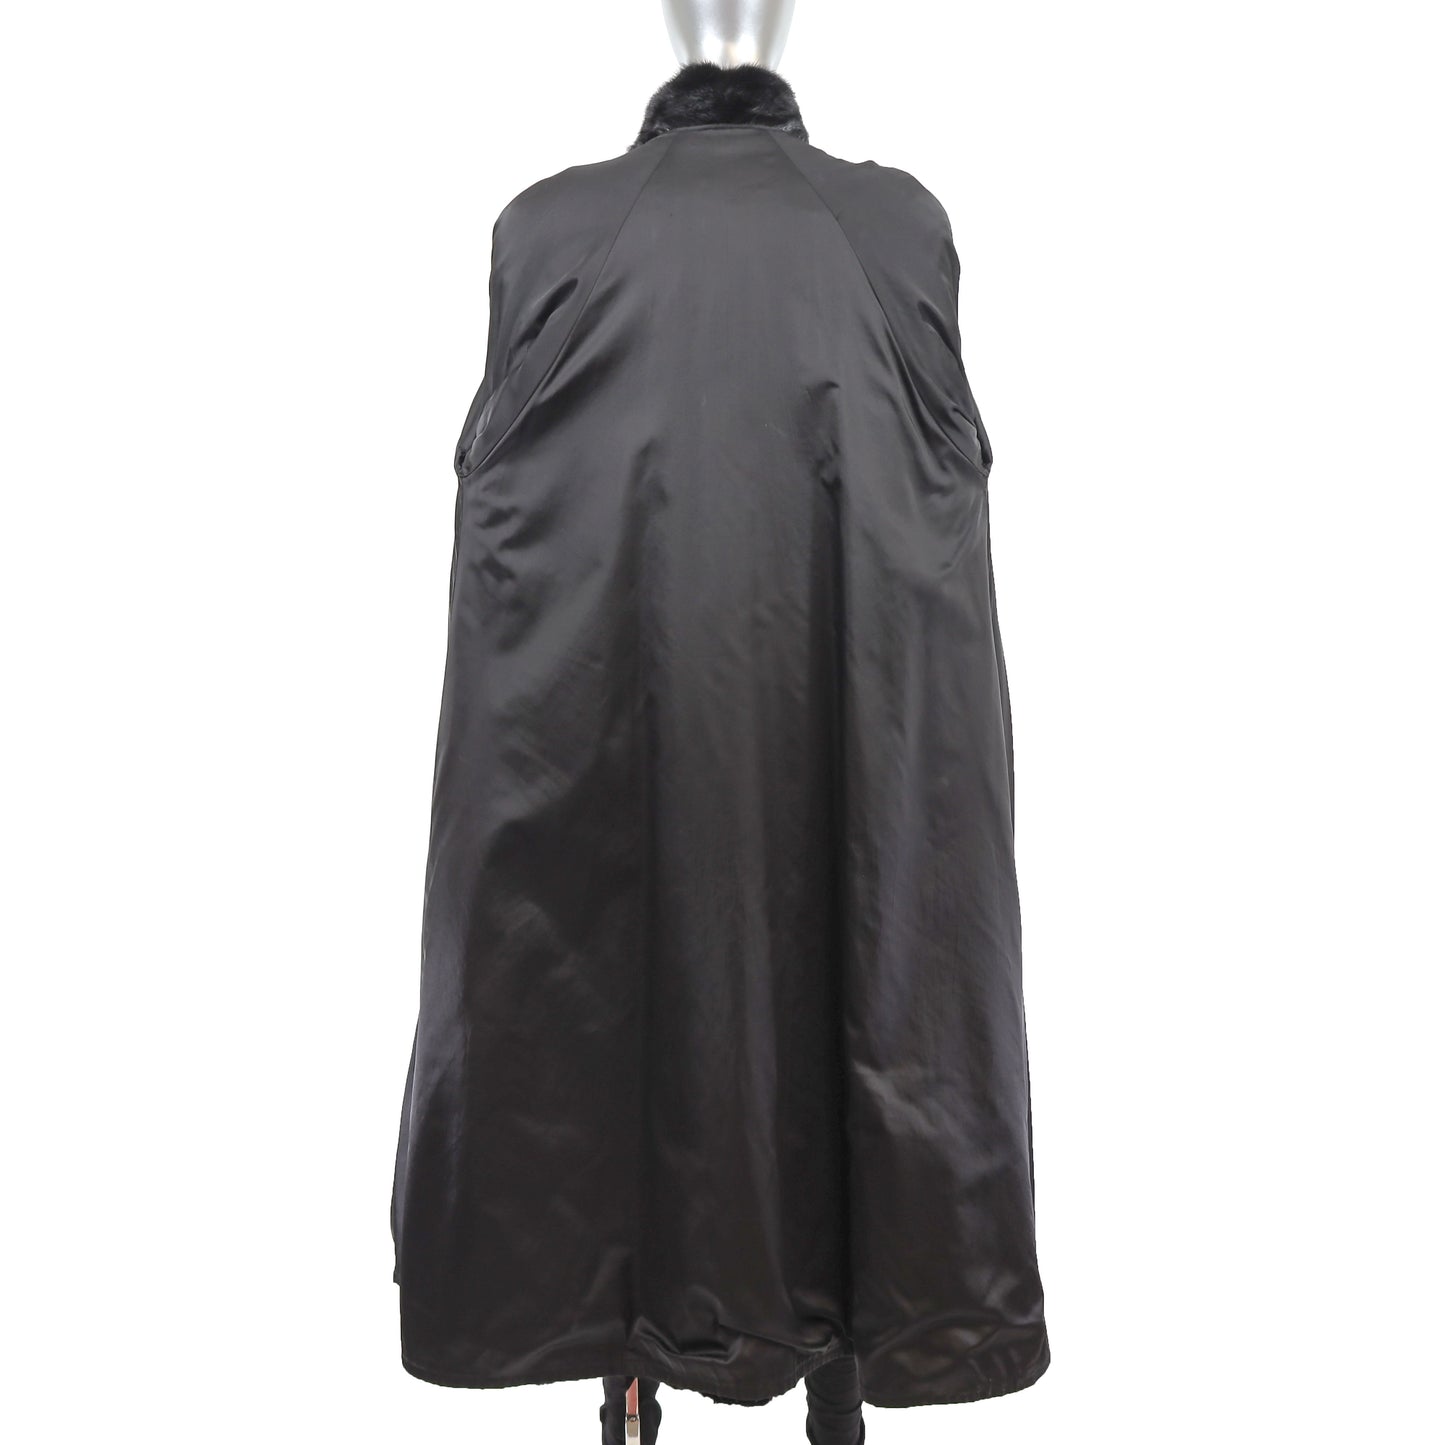 Black Mink Coat- Size L